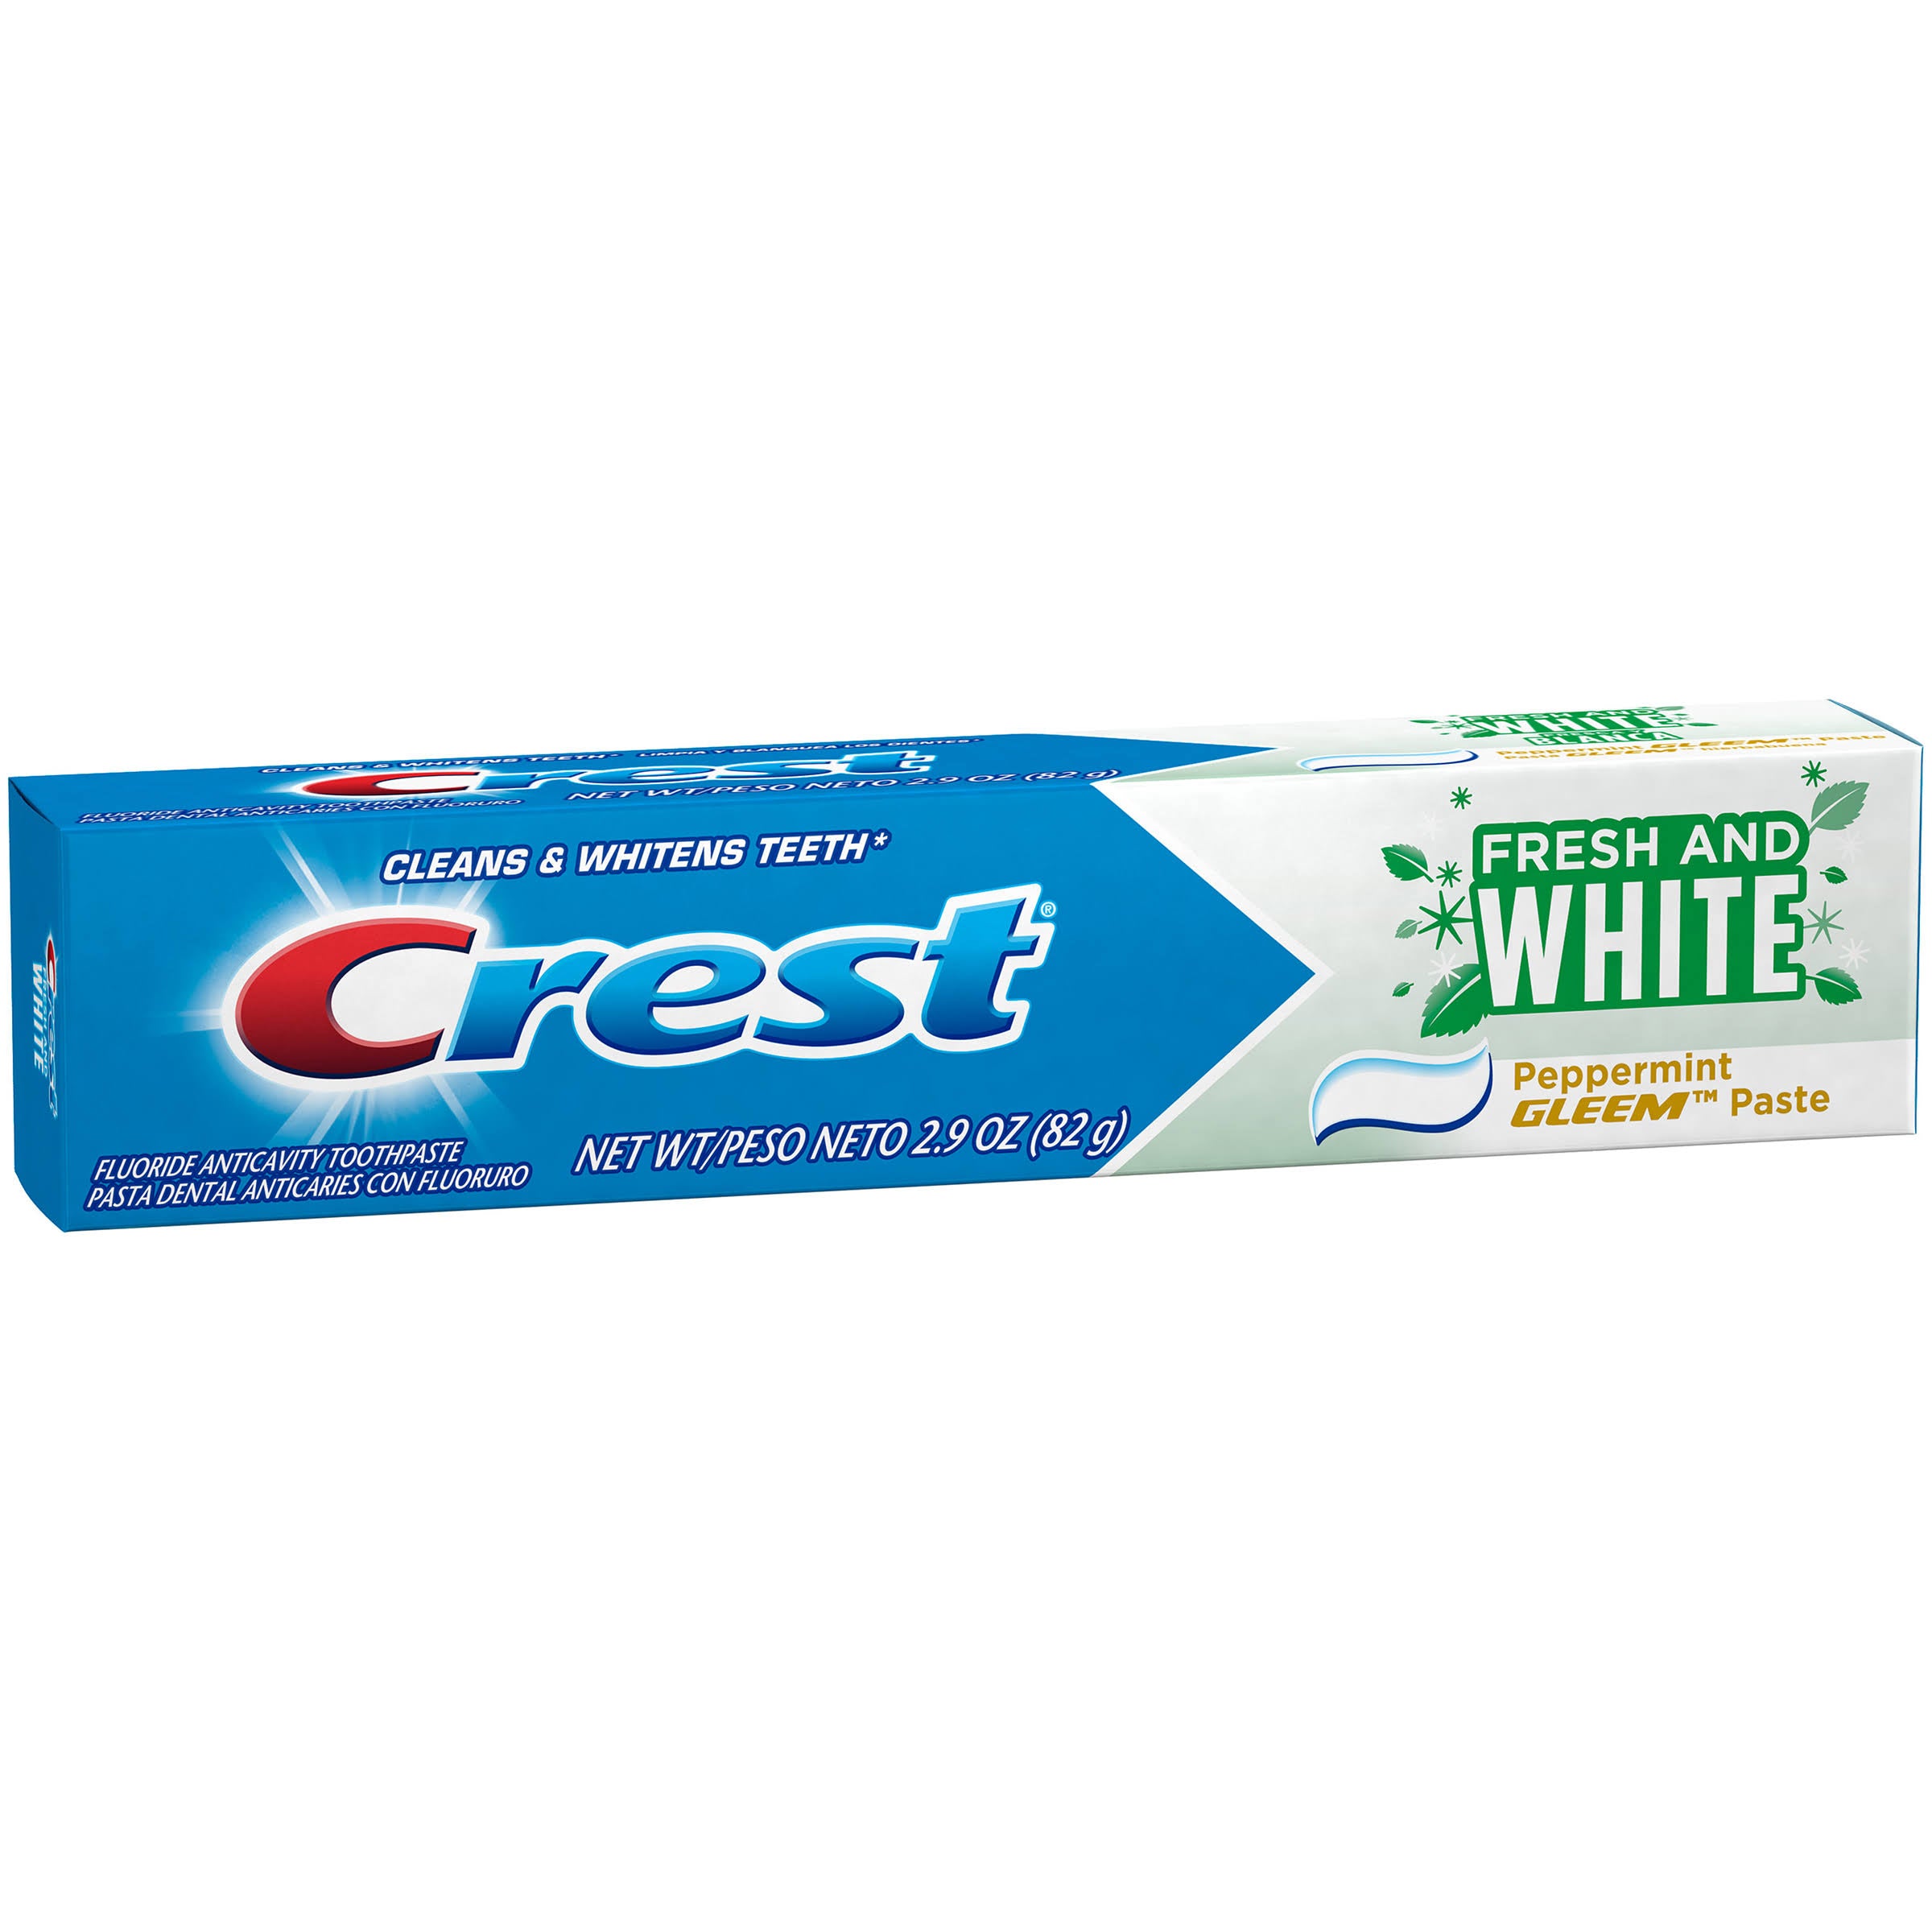 Crest® Fresh White Peppermint Gleem Toothpaste - ADDROS.COM